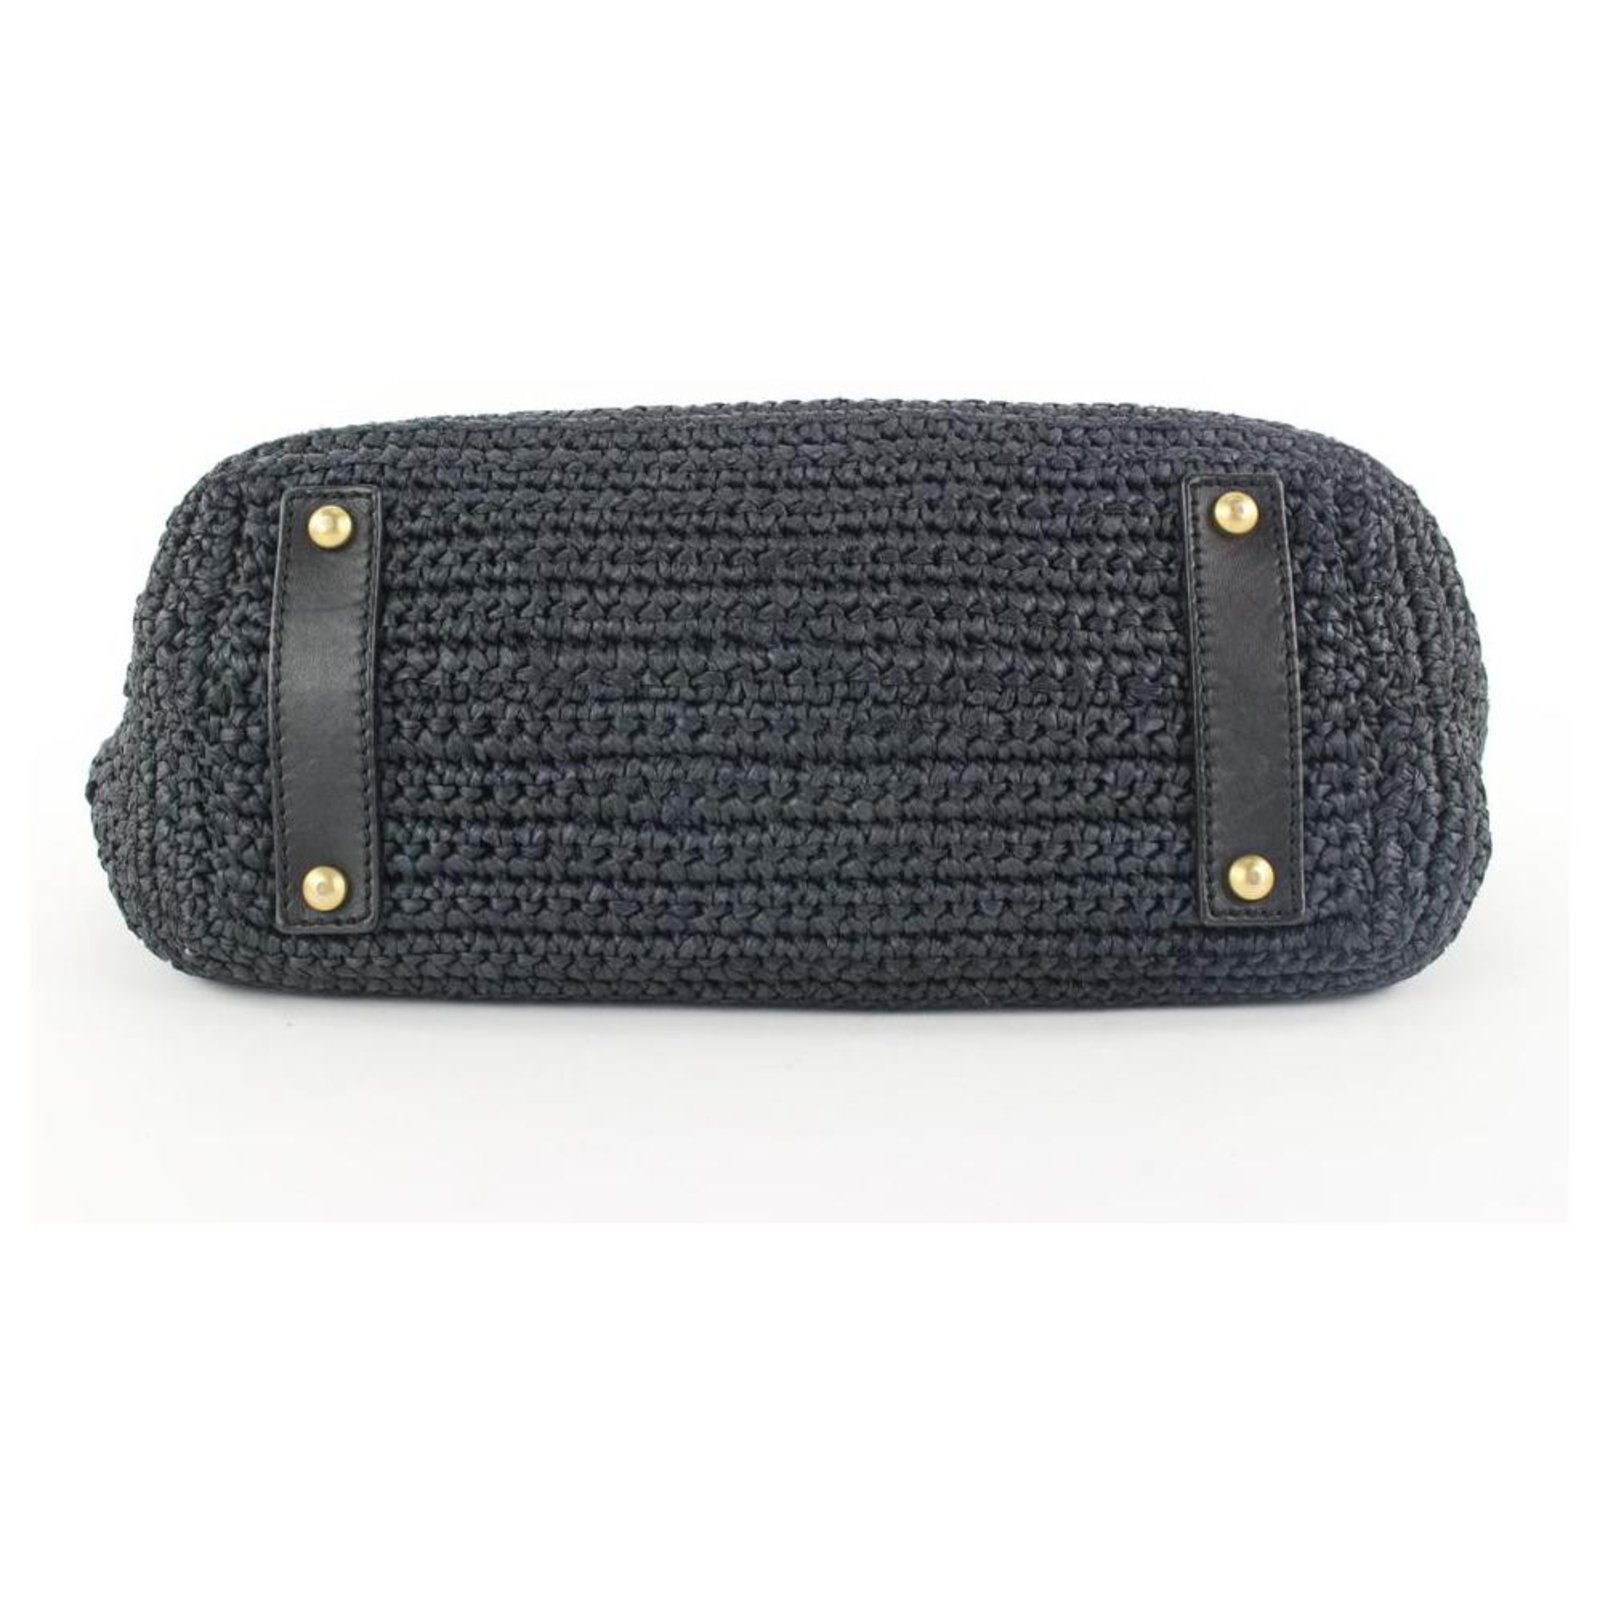 Chanel Navy Blue Raffia Straw CC Turnlock Chain Tote Bag Leather